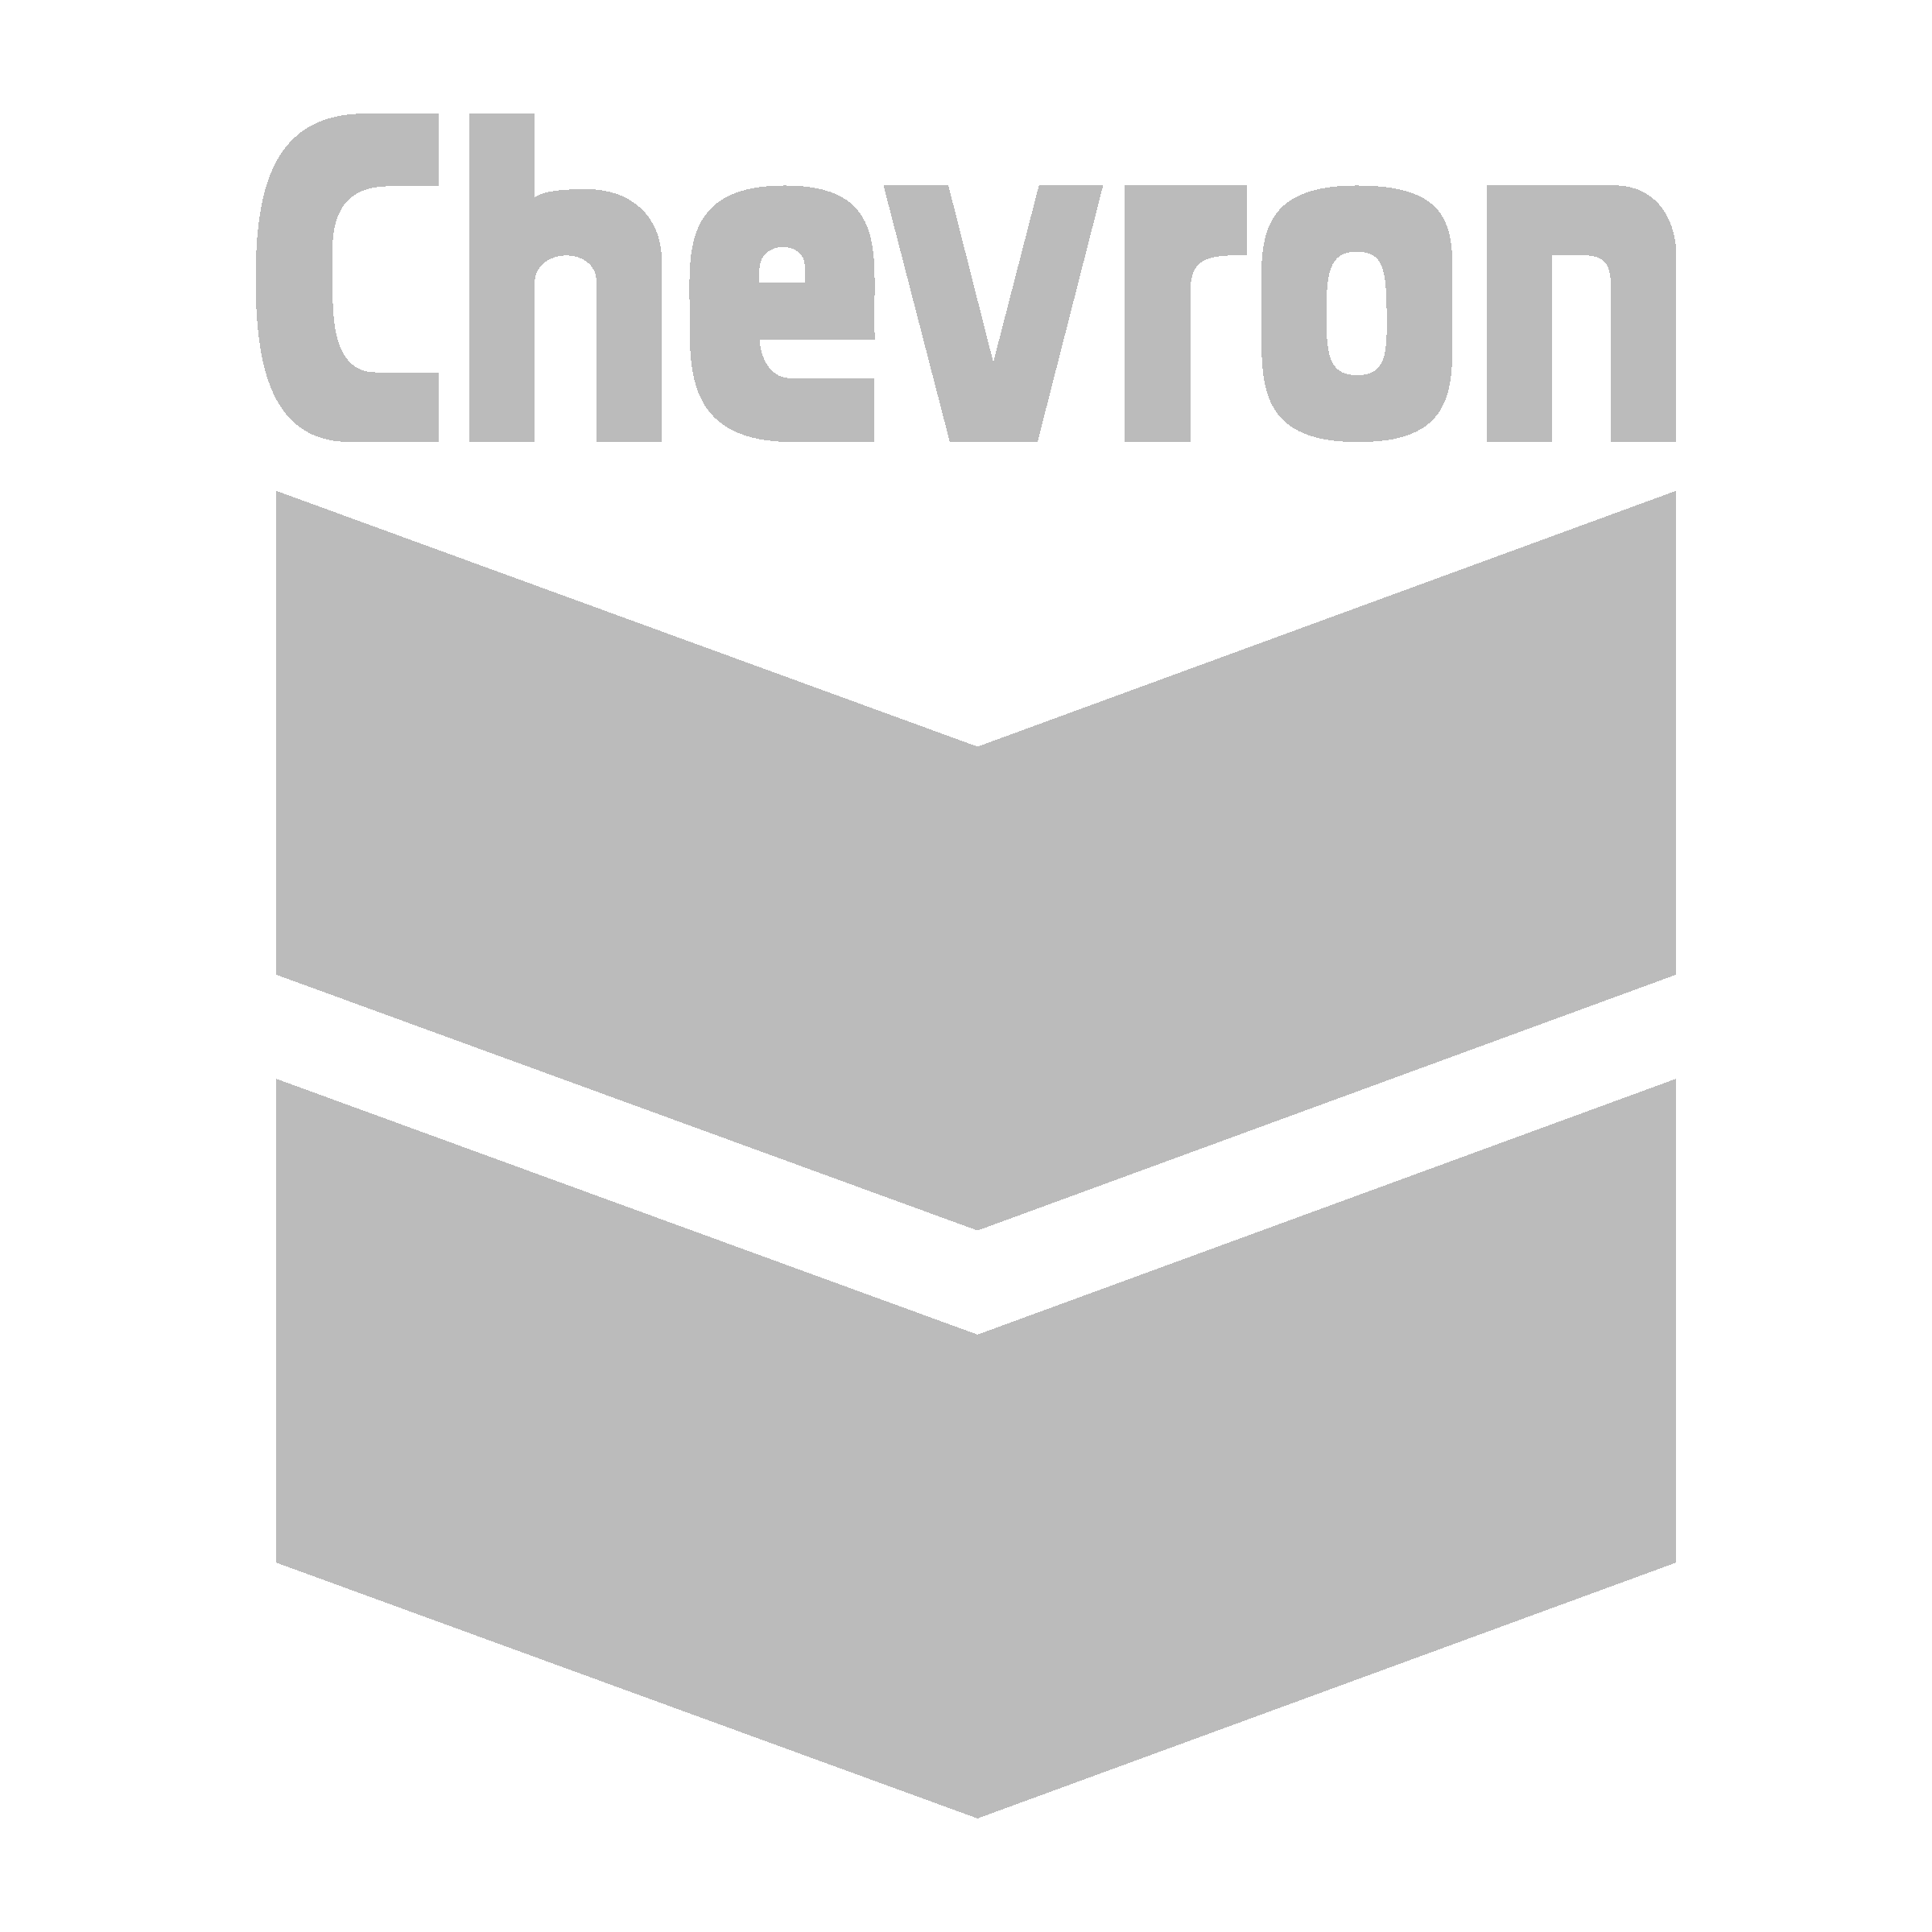 chevron-logo-png-transparent.png